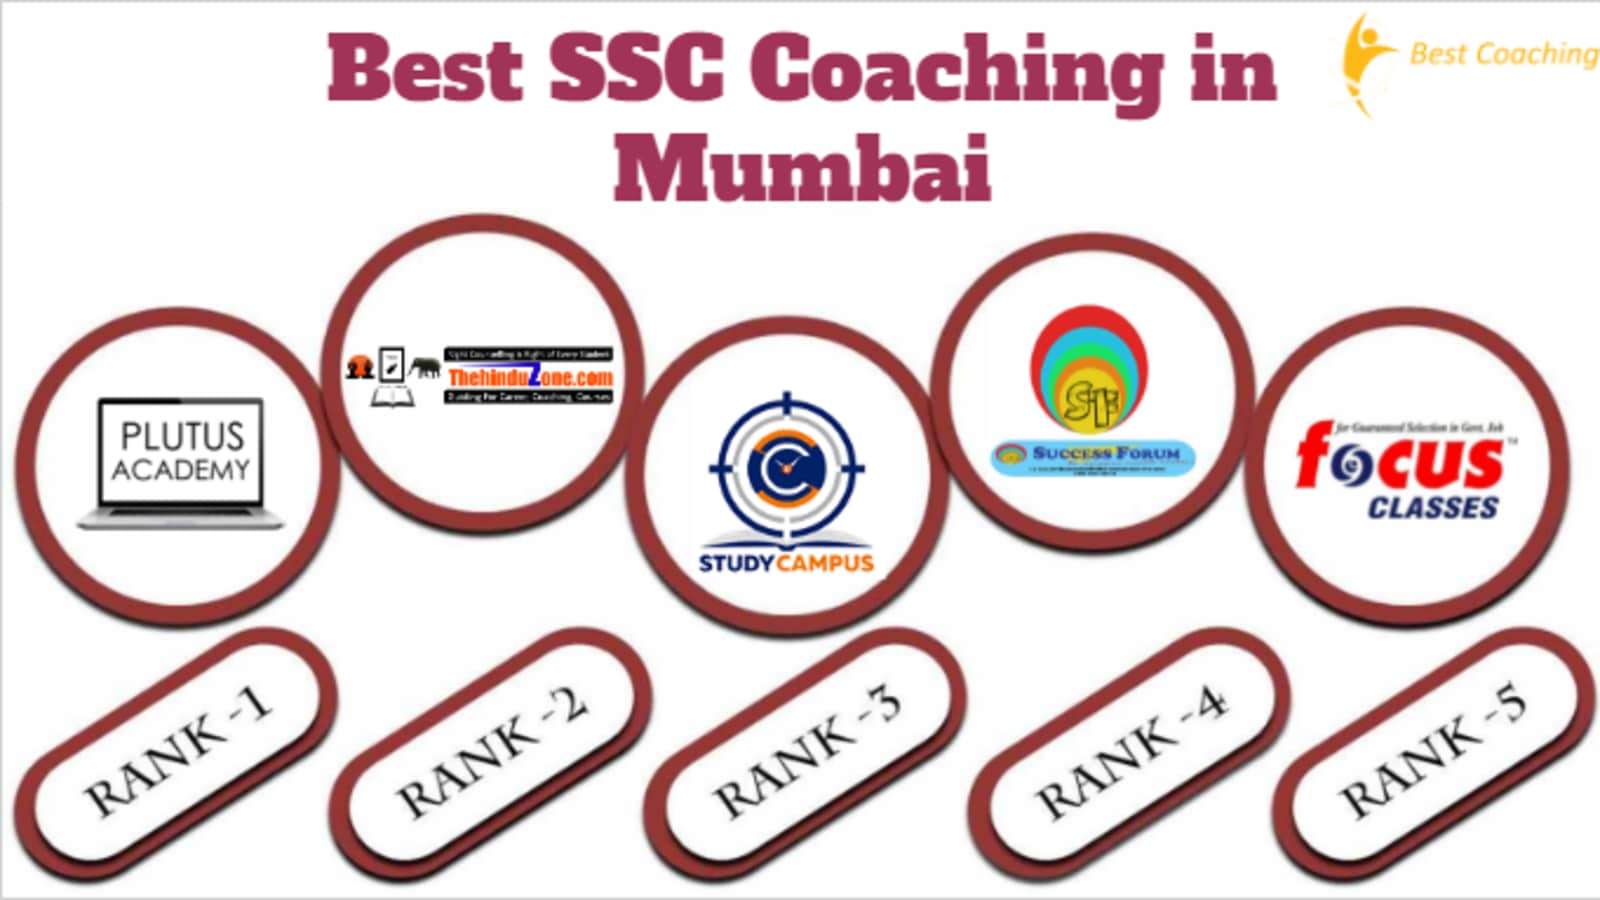 Best SSC Coaching Institute in Mumbai.